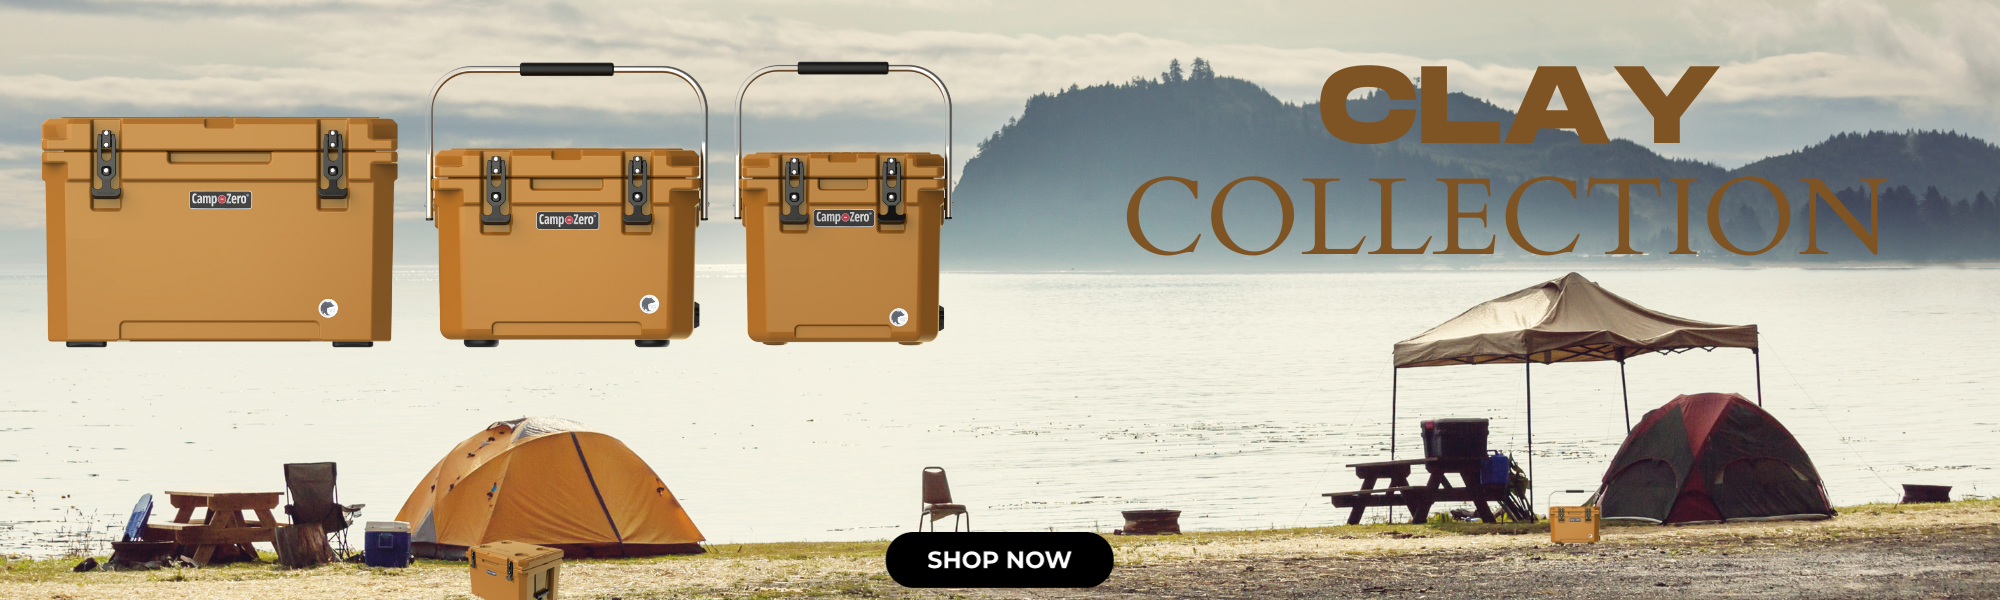 Camp-Zero  Premium Coolers & Outdoor Products